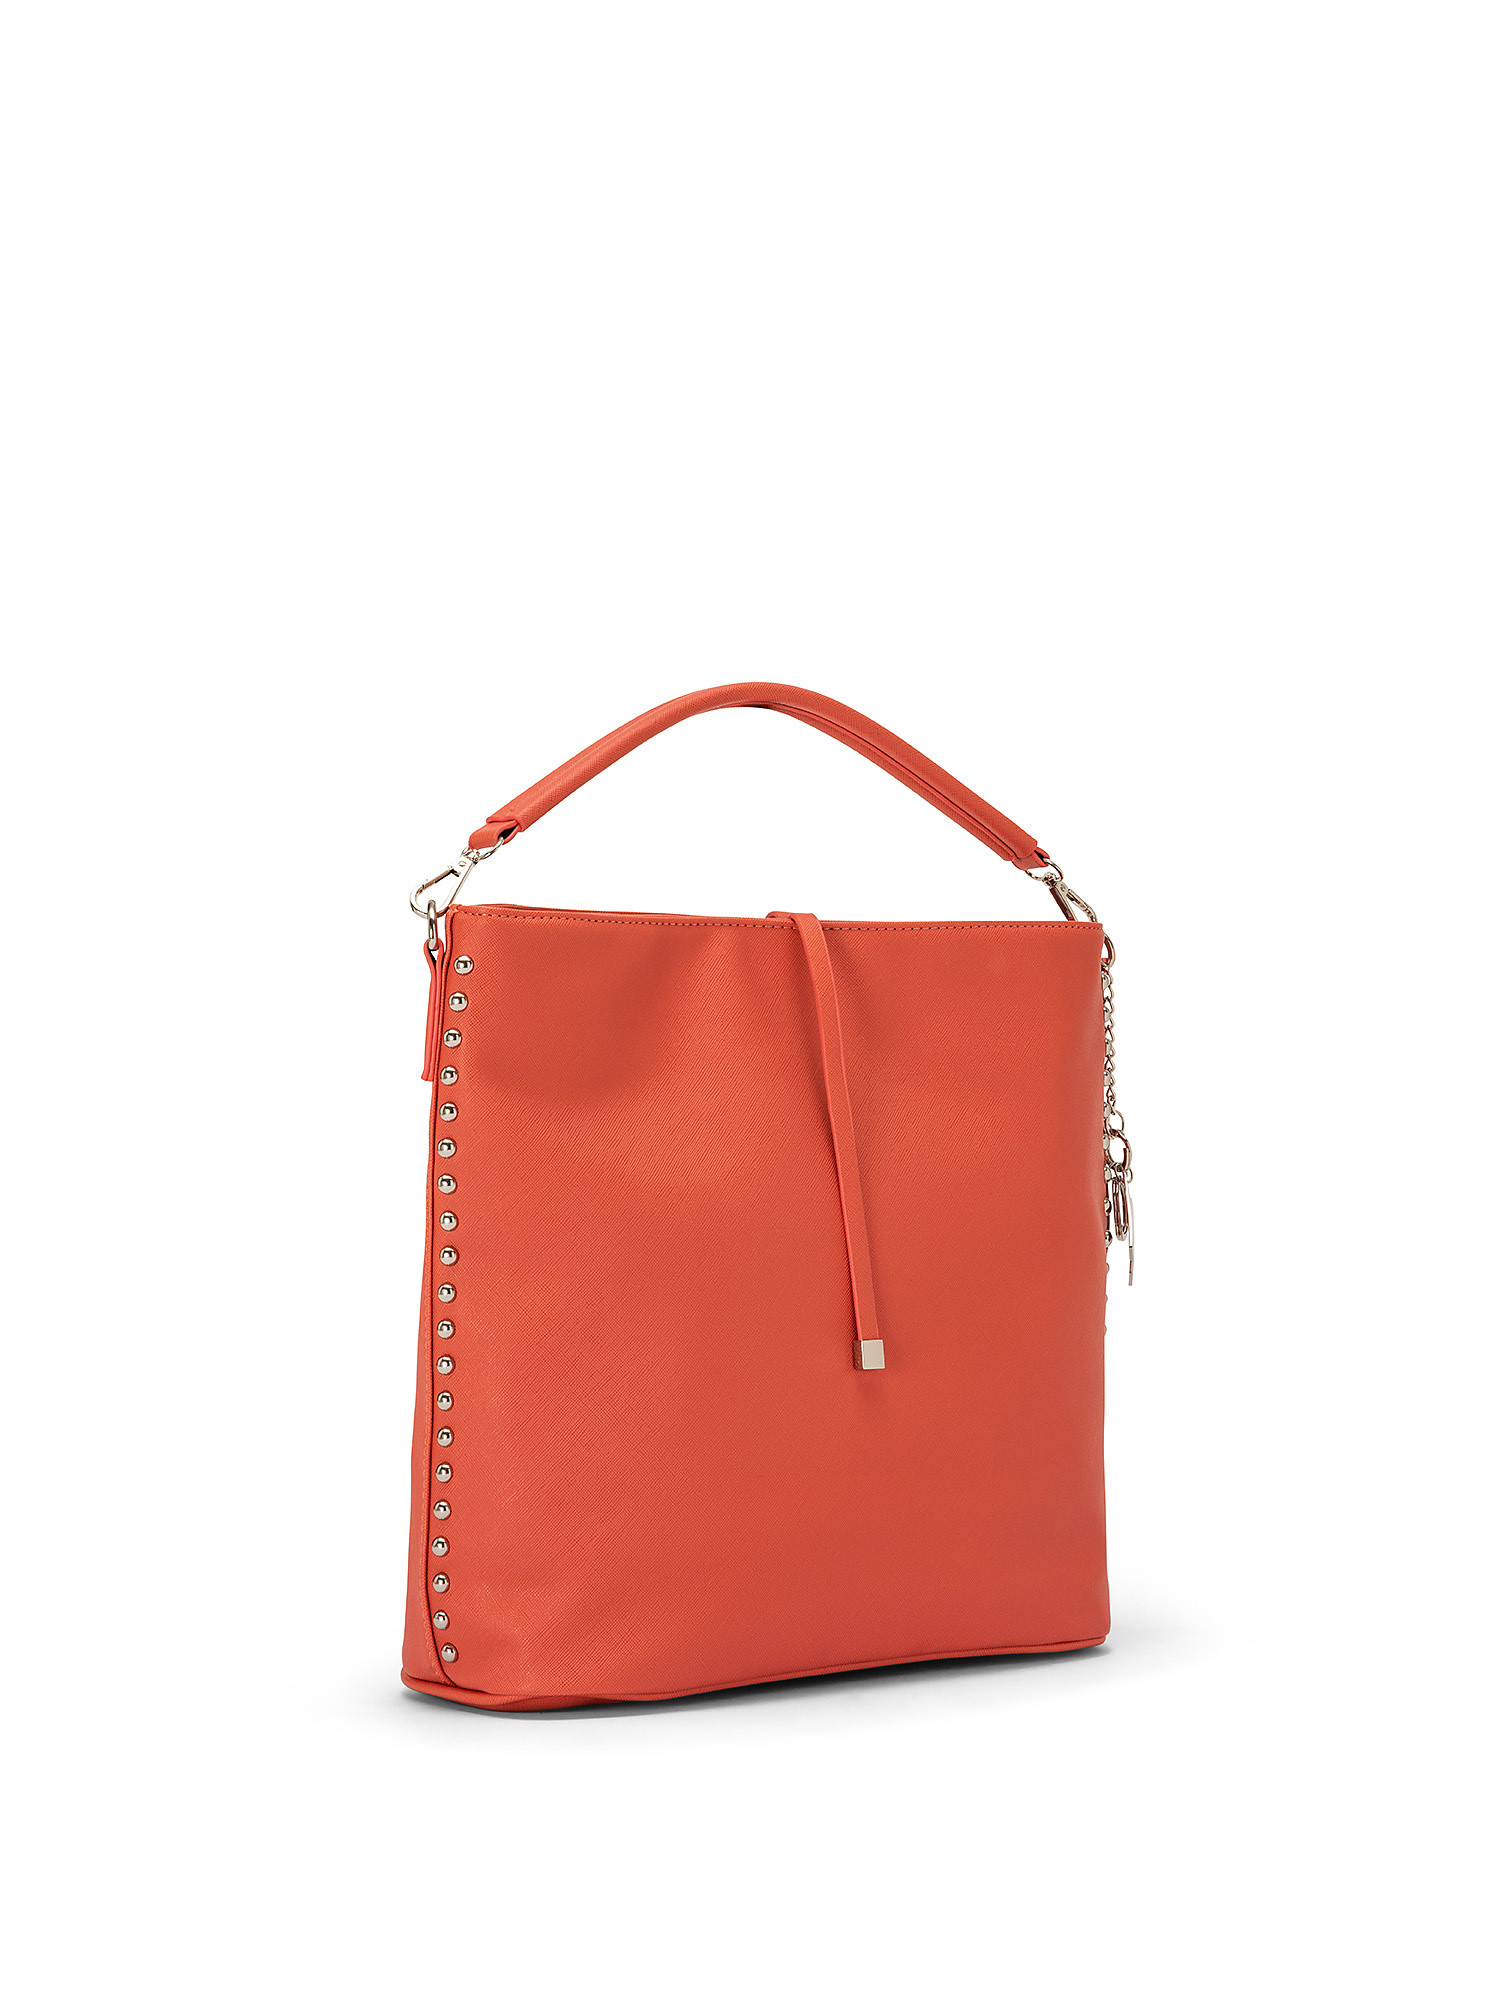 Hobo bag, Coral Red, large image number 1